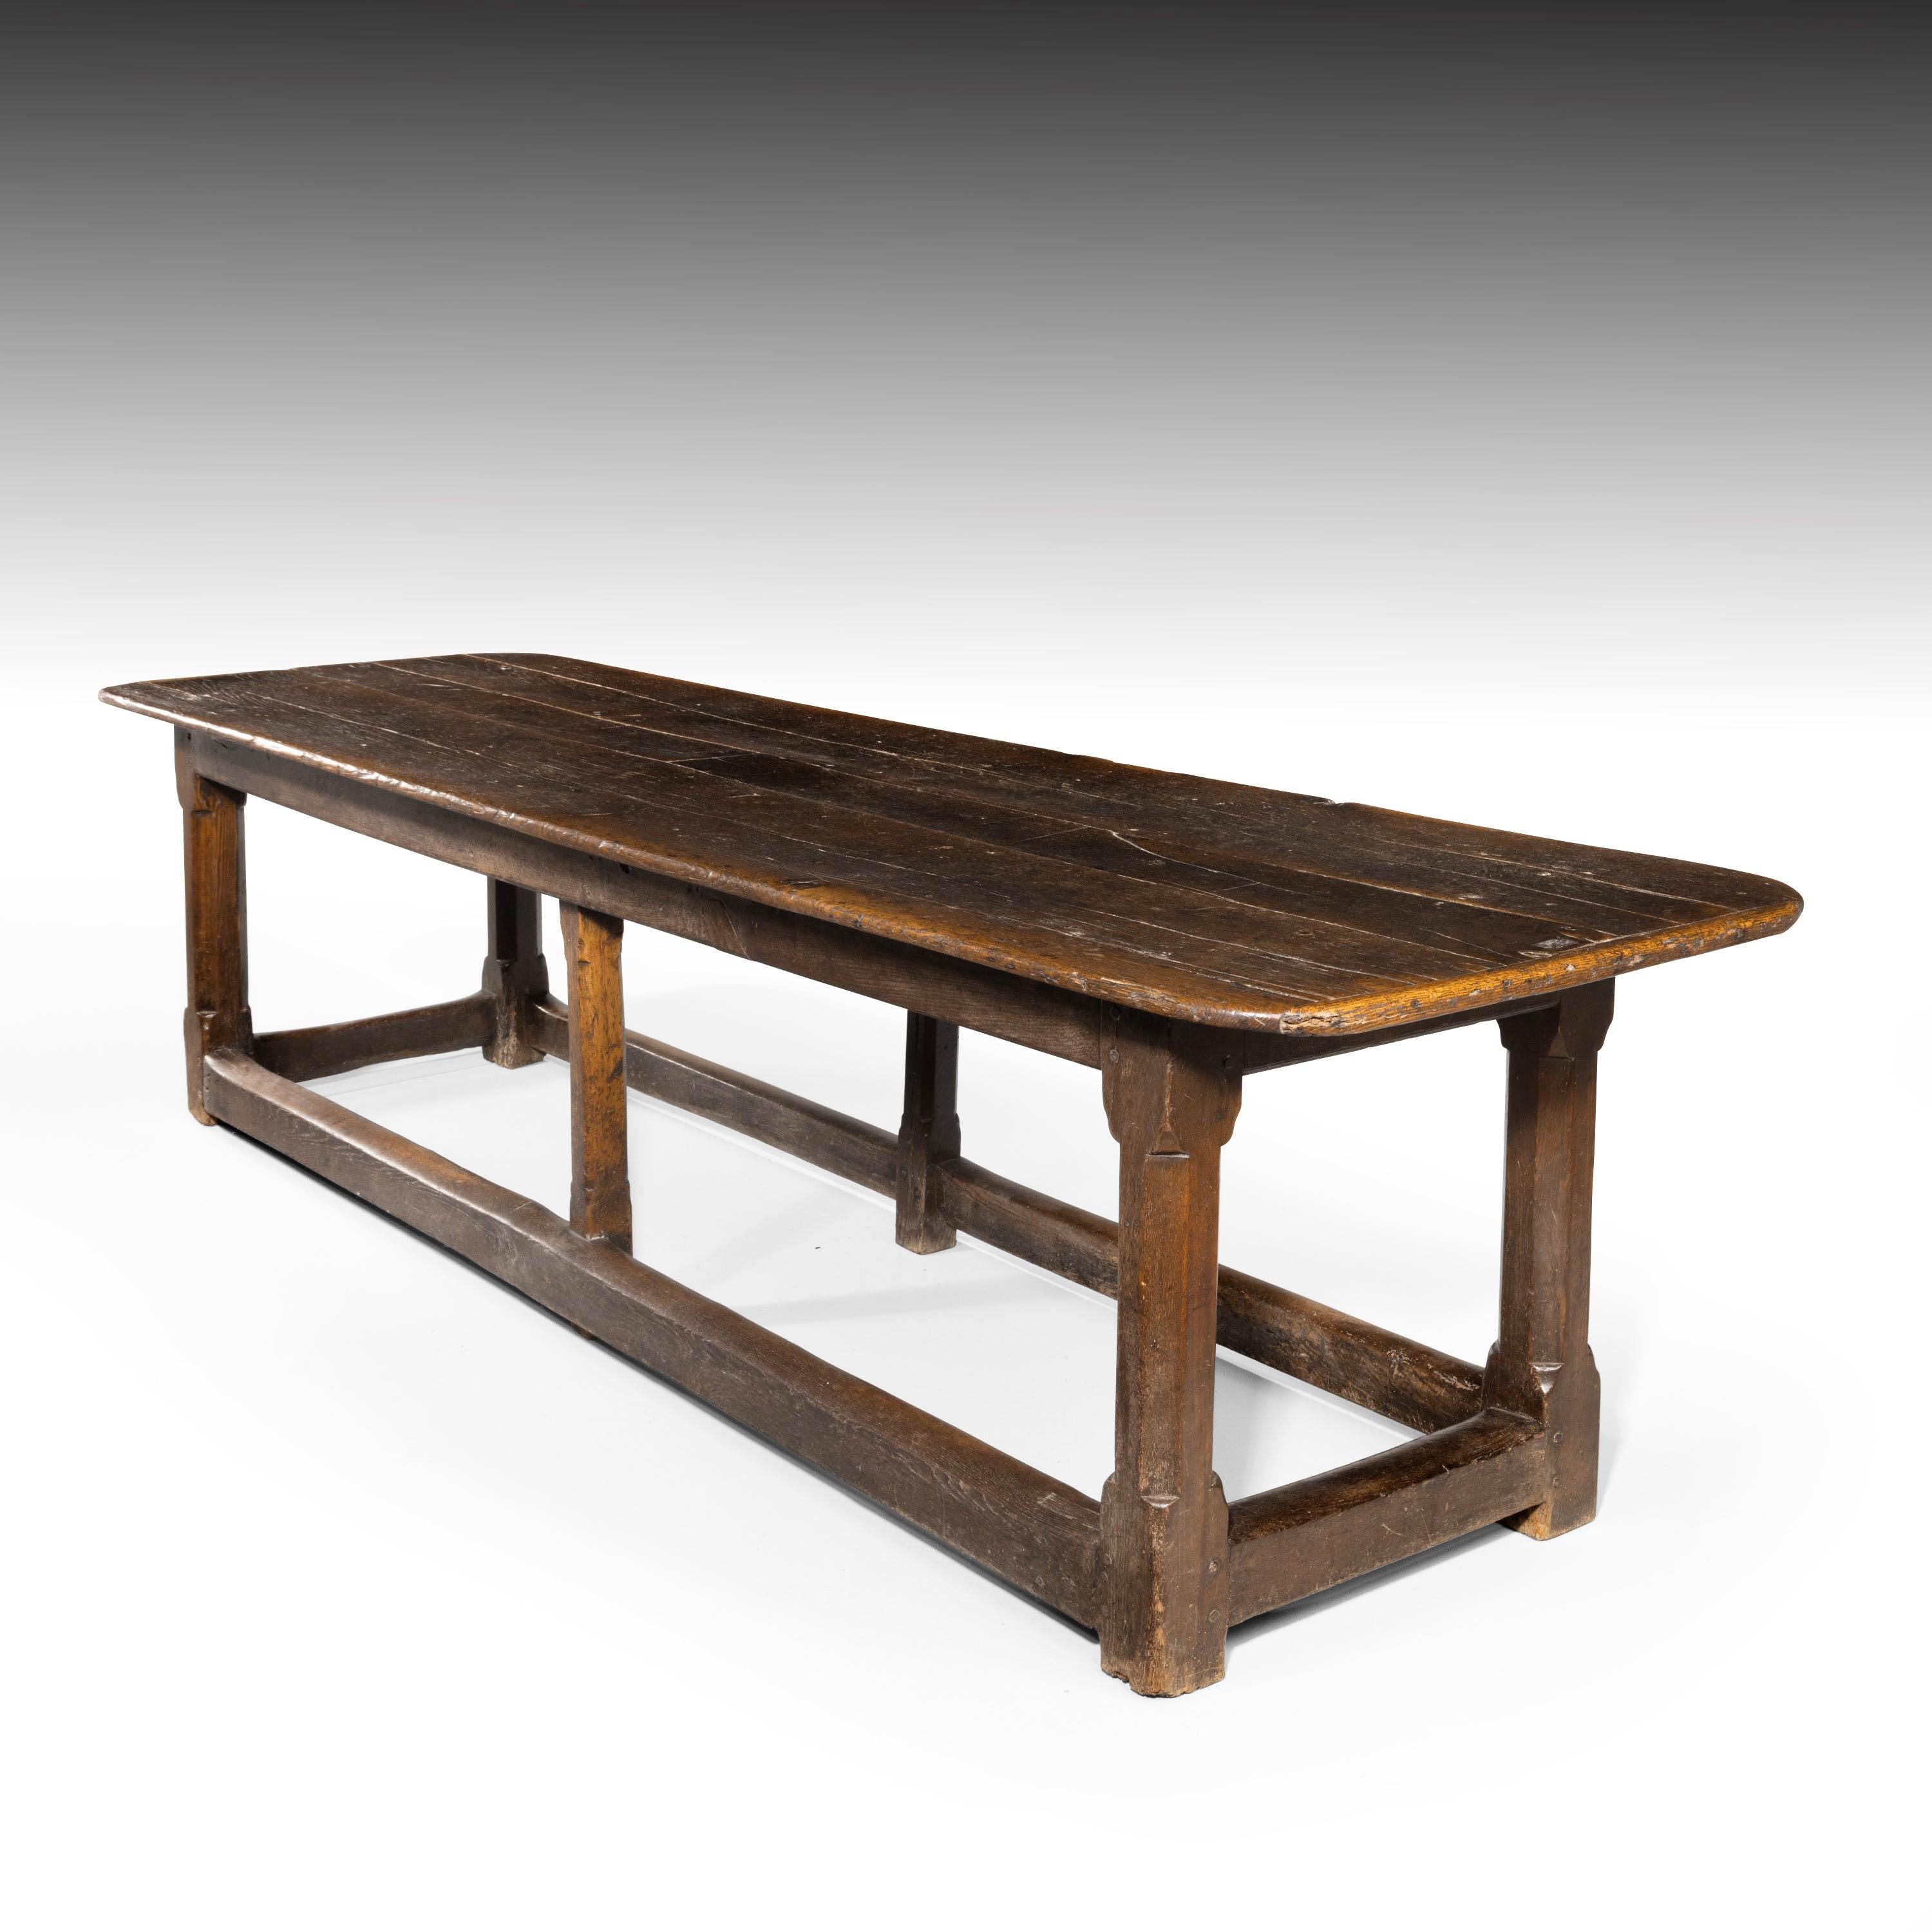 English Fine and Rare Late 18th Century Oak Trestle Table